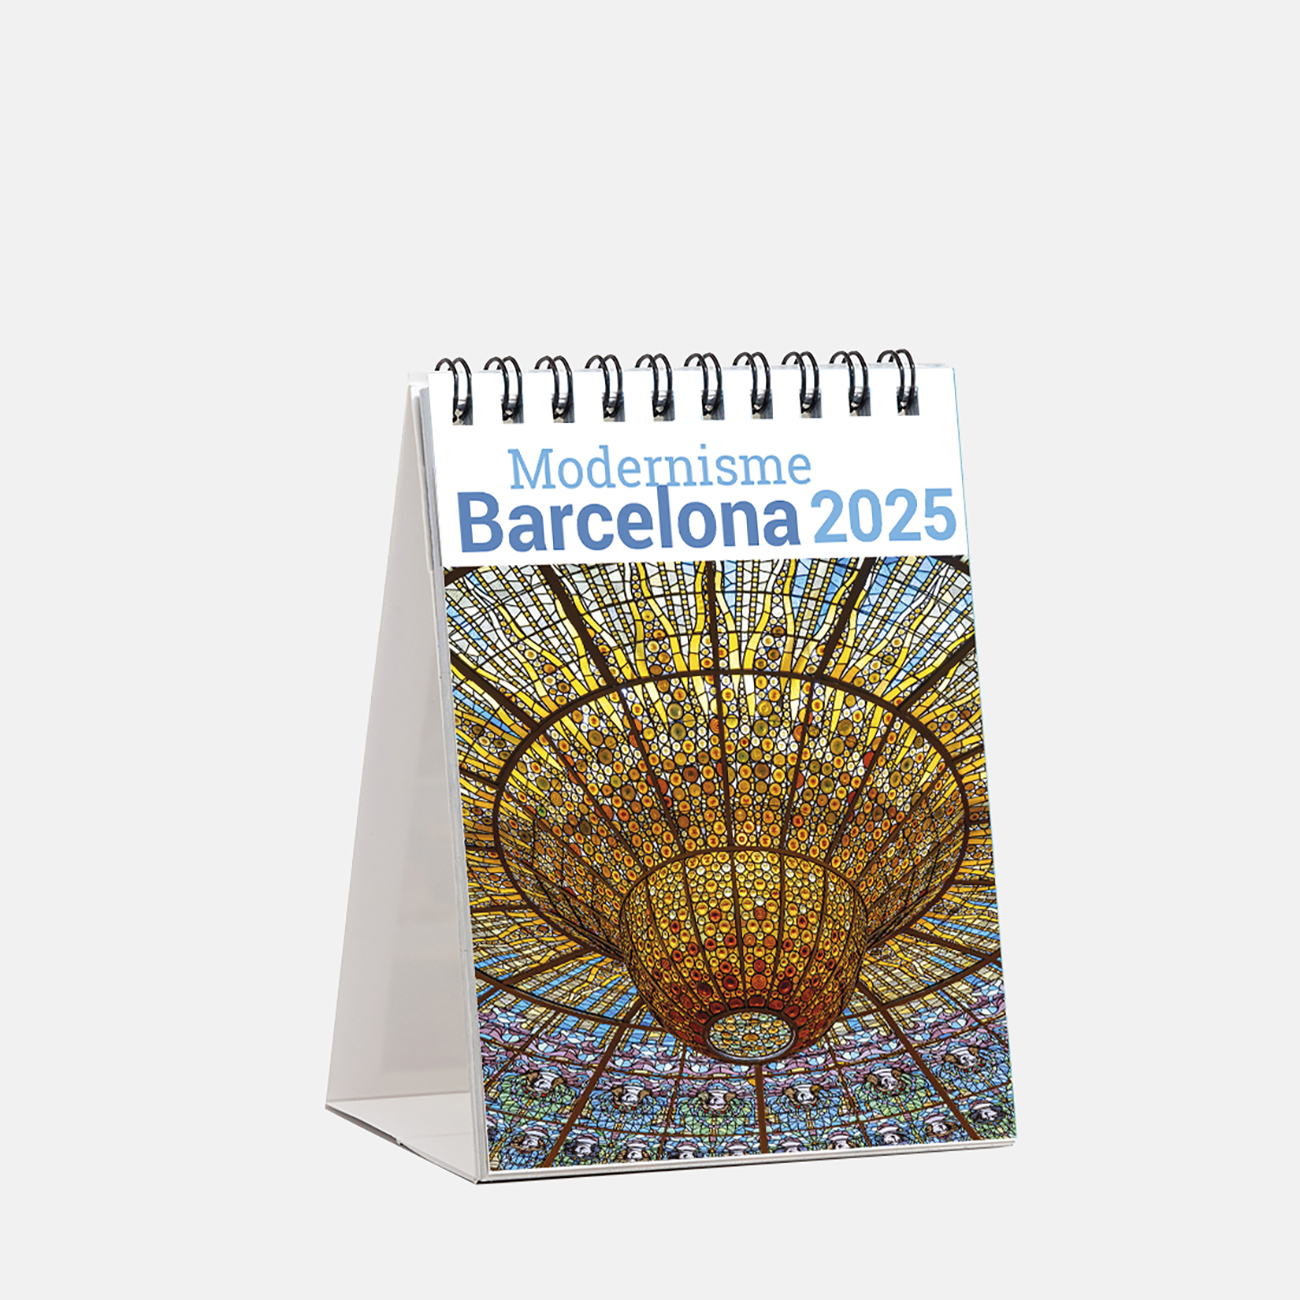 Calendari 2025 Modernisme Barcelona sm25mod calendario mini 2025 modernisme barcelona